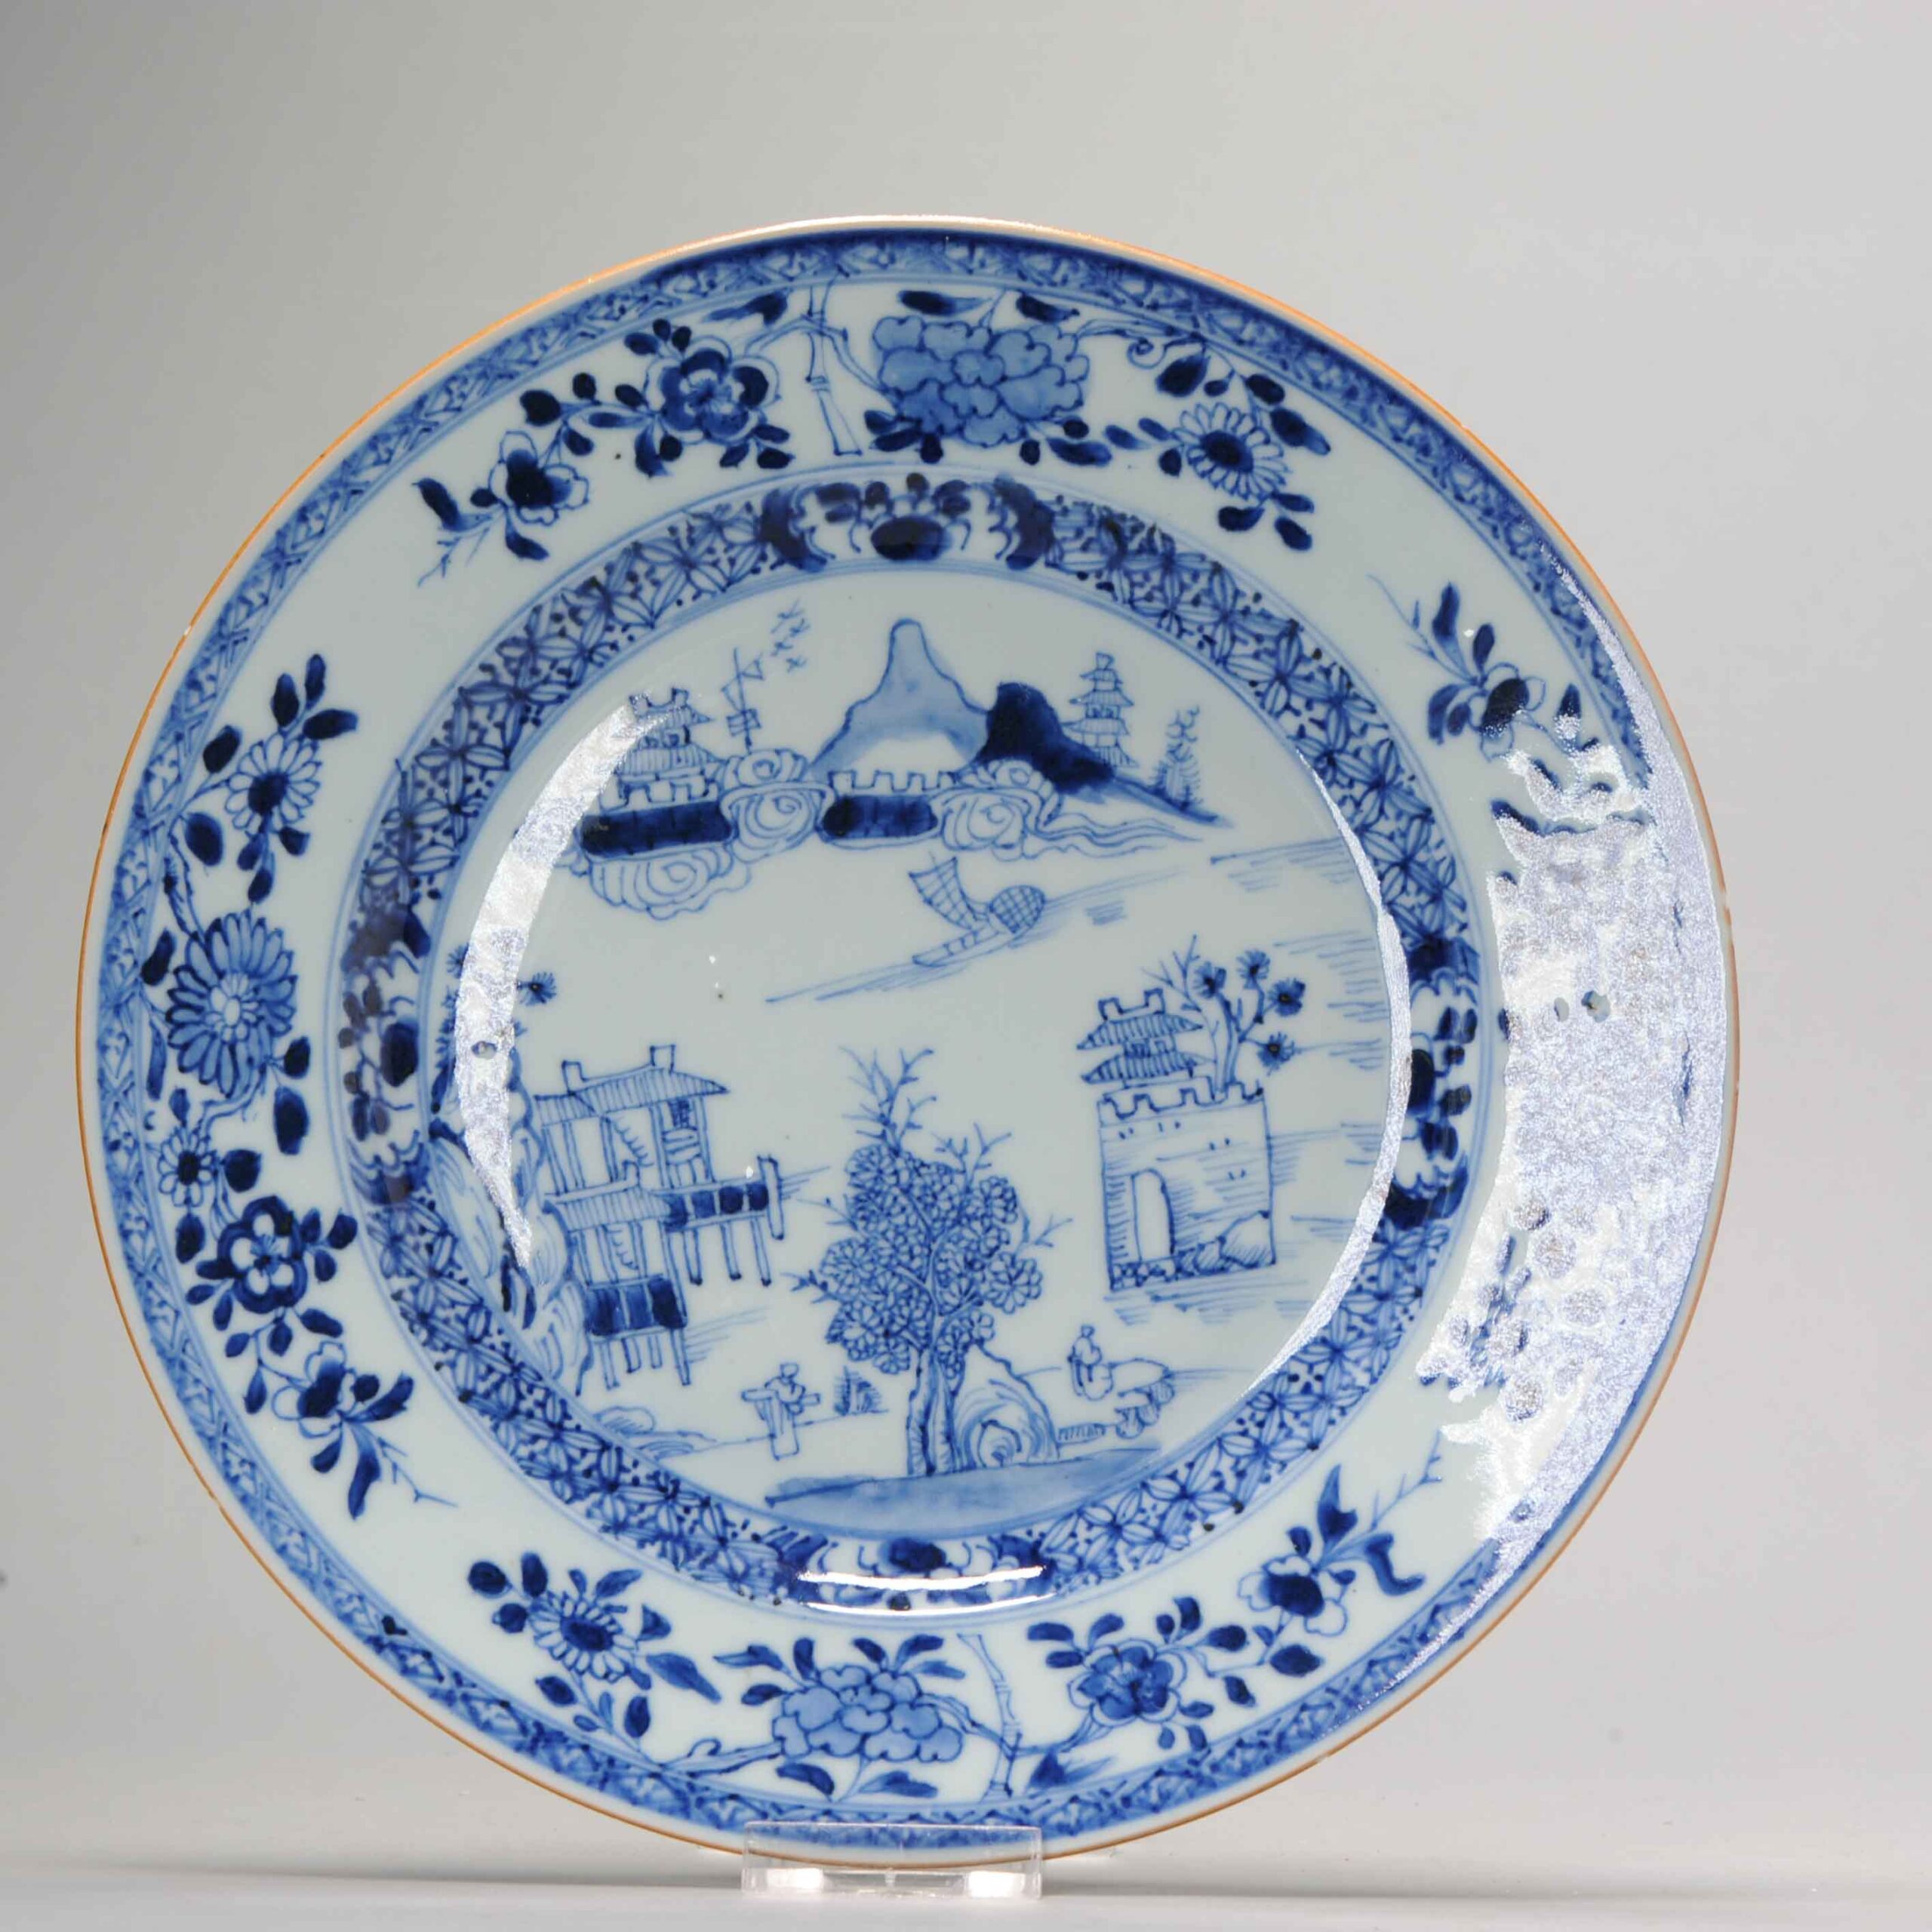 1095 Lovely Yongzheng / Qianlong Blue and white plate with Landscape in Jiajing style